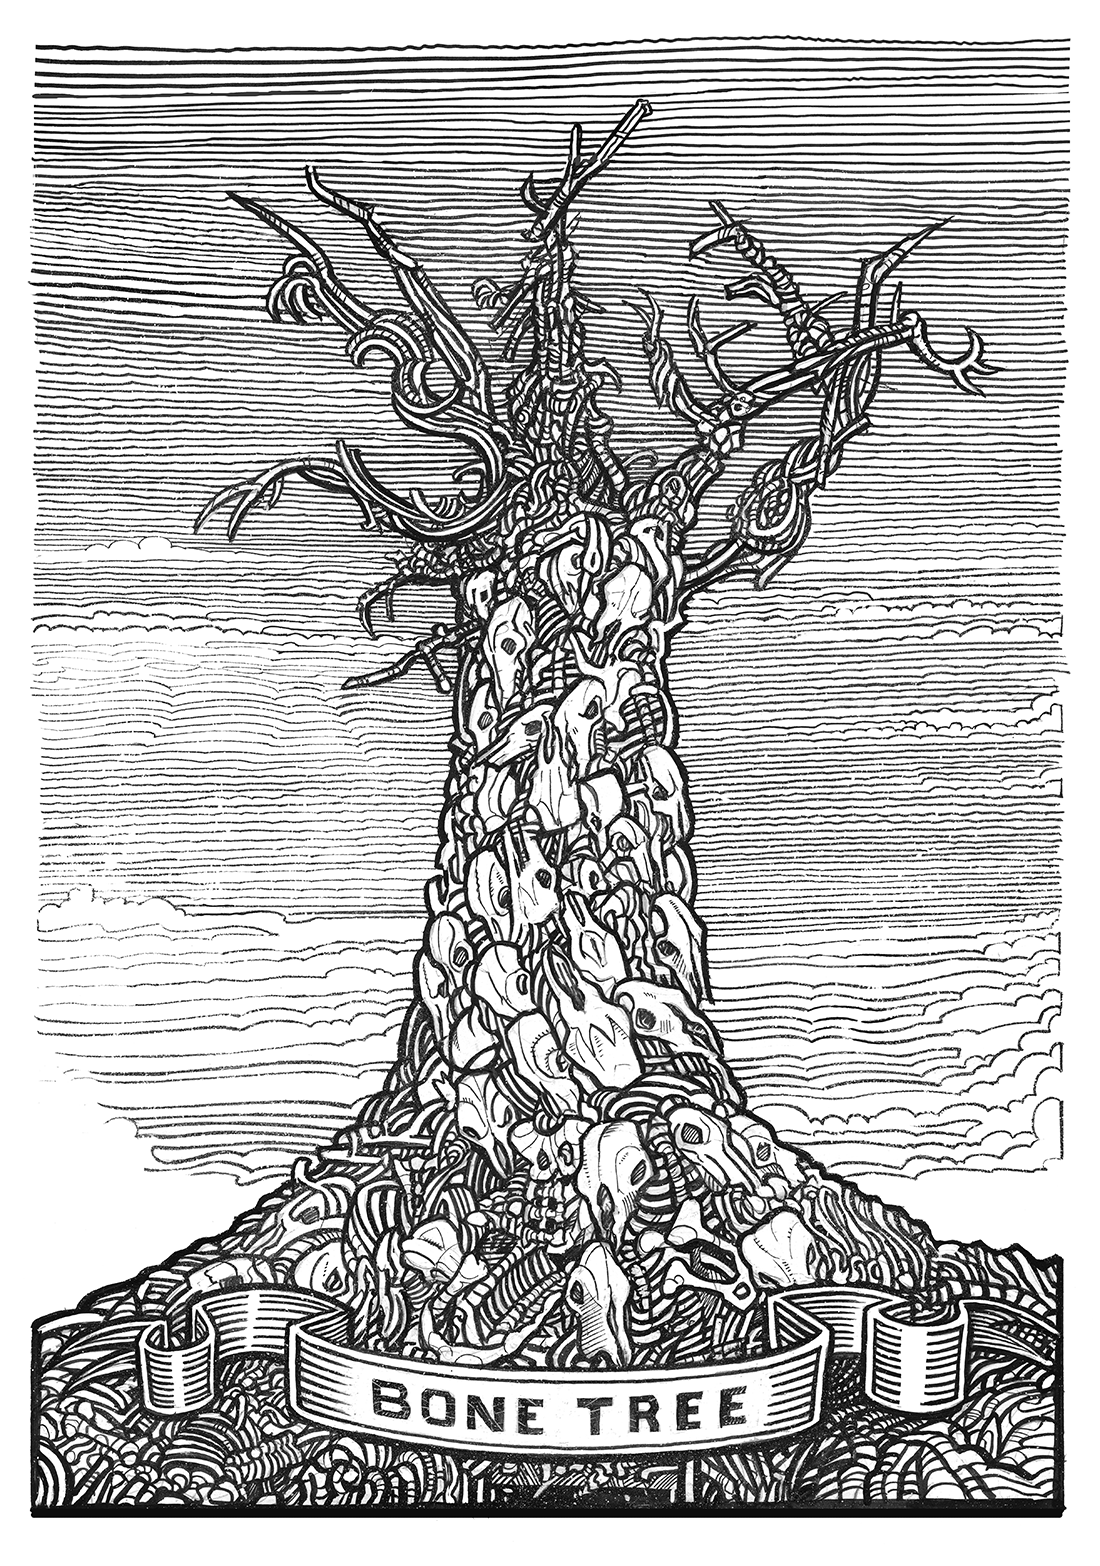 173: Bone Tree